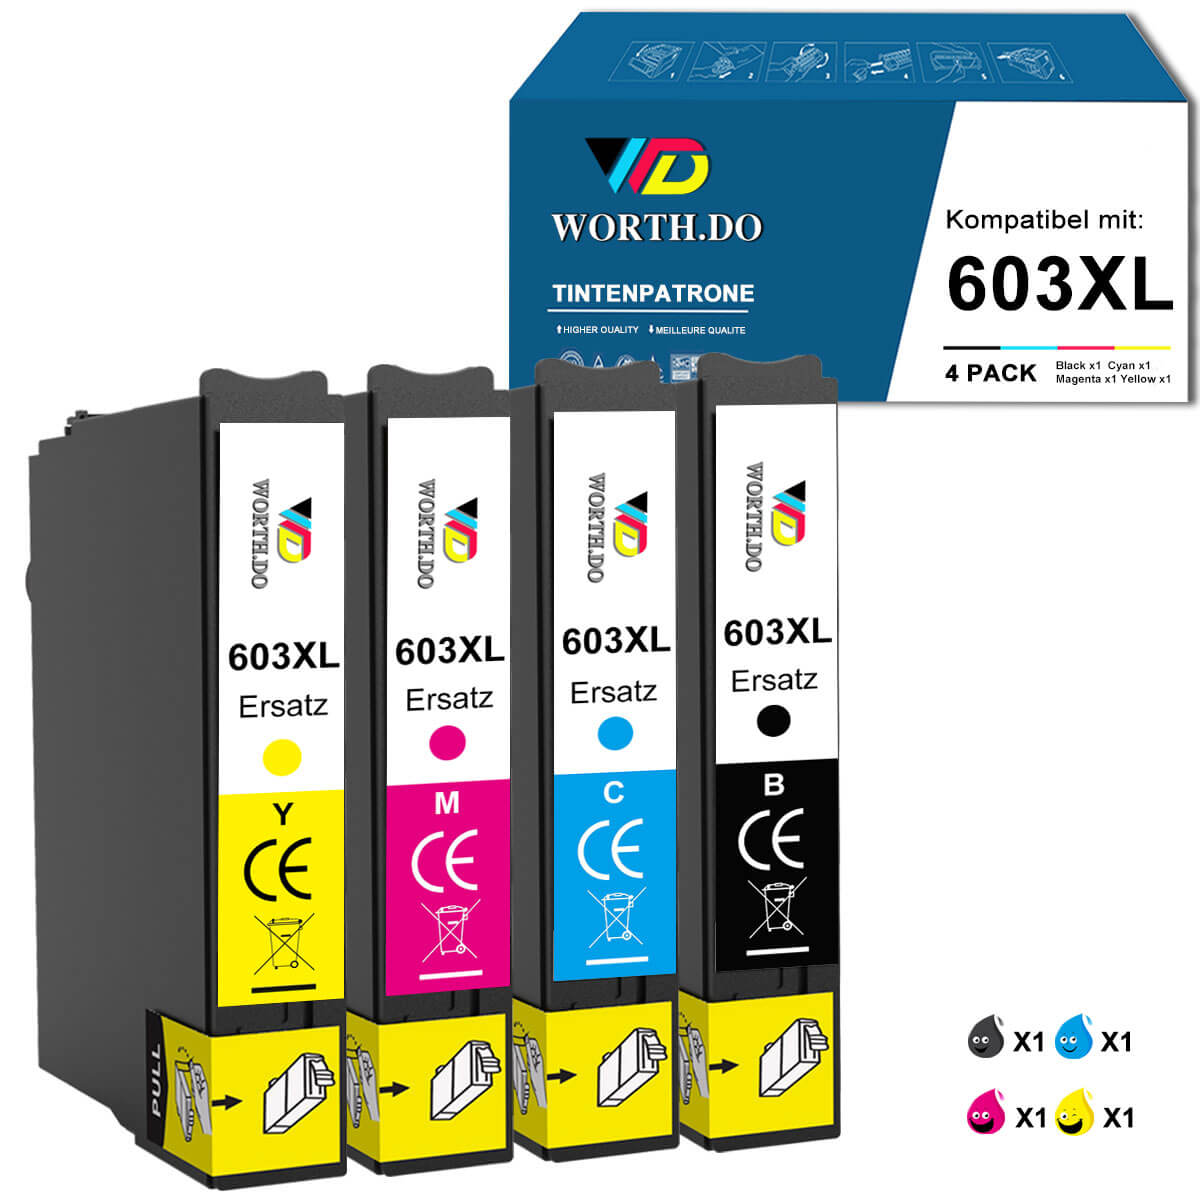       worthdo-kompatible-tintenpatronen-feur-epson-603xl-multipack